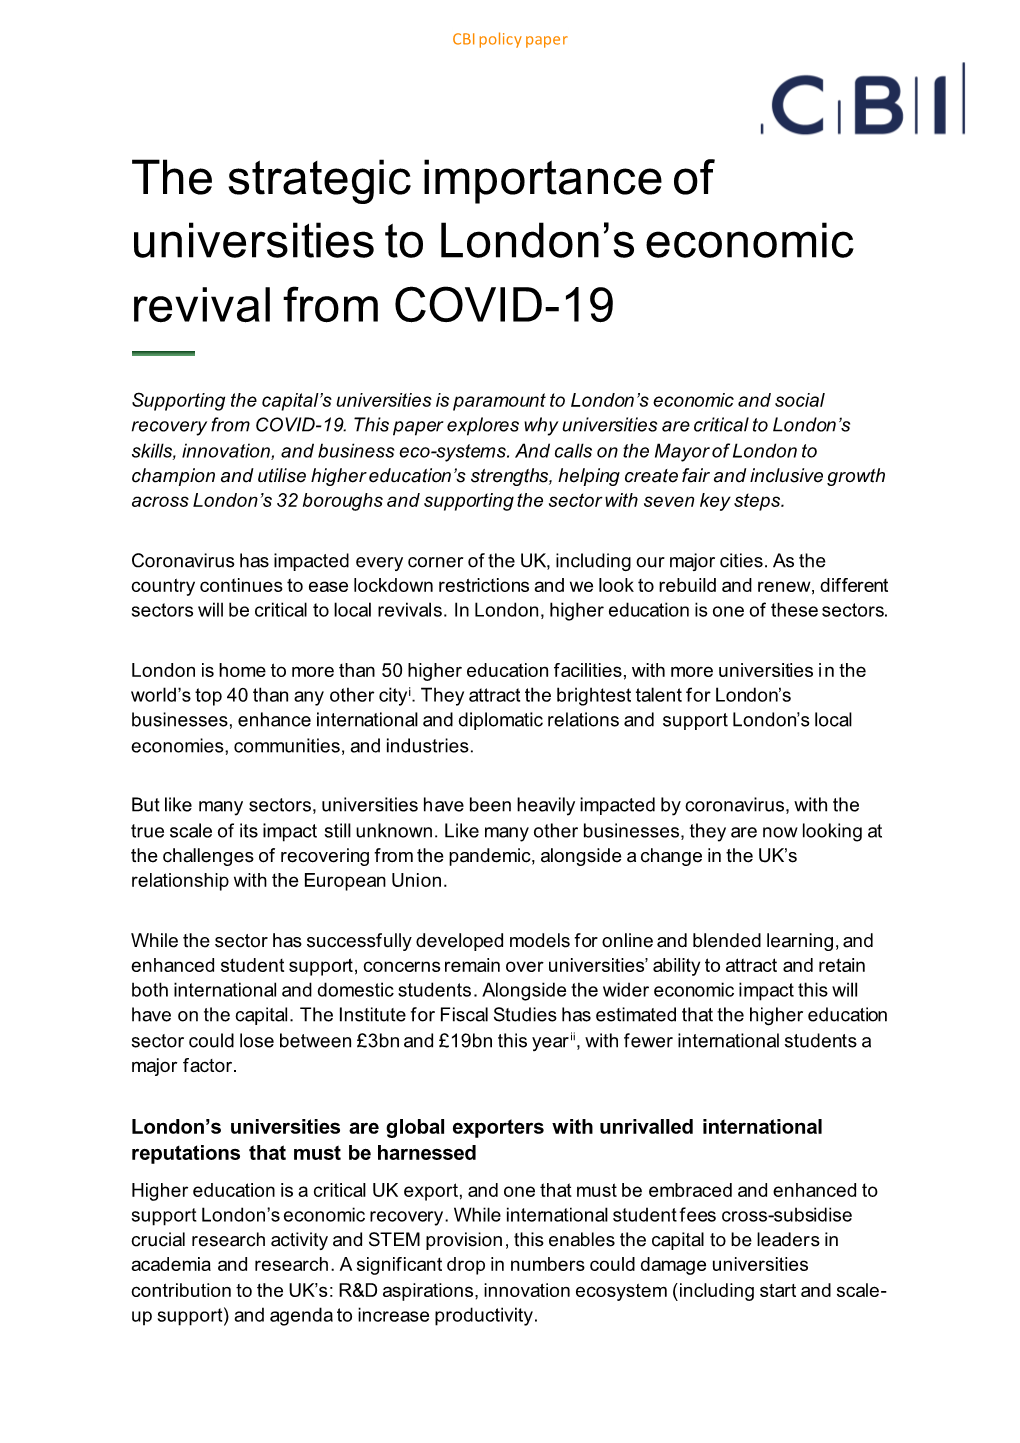 The Strategic Importance of Universities to London's Economic